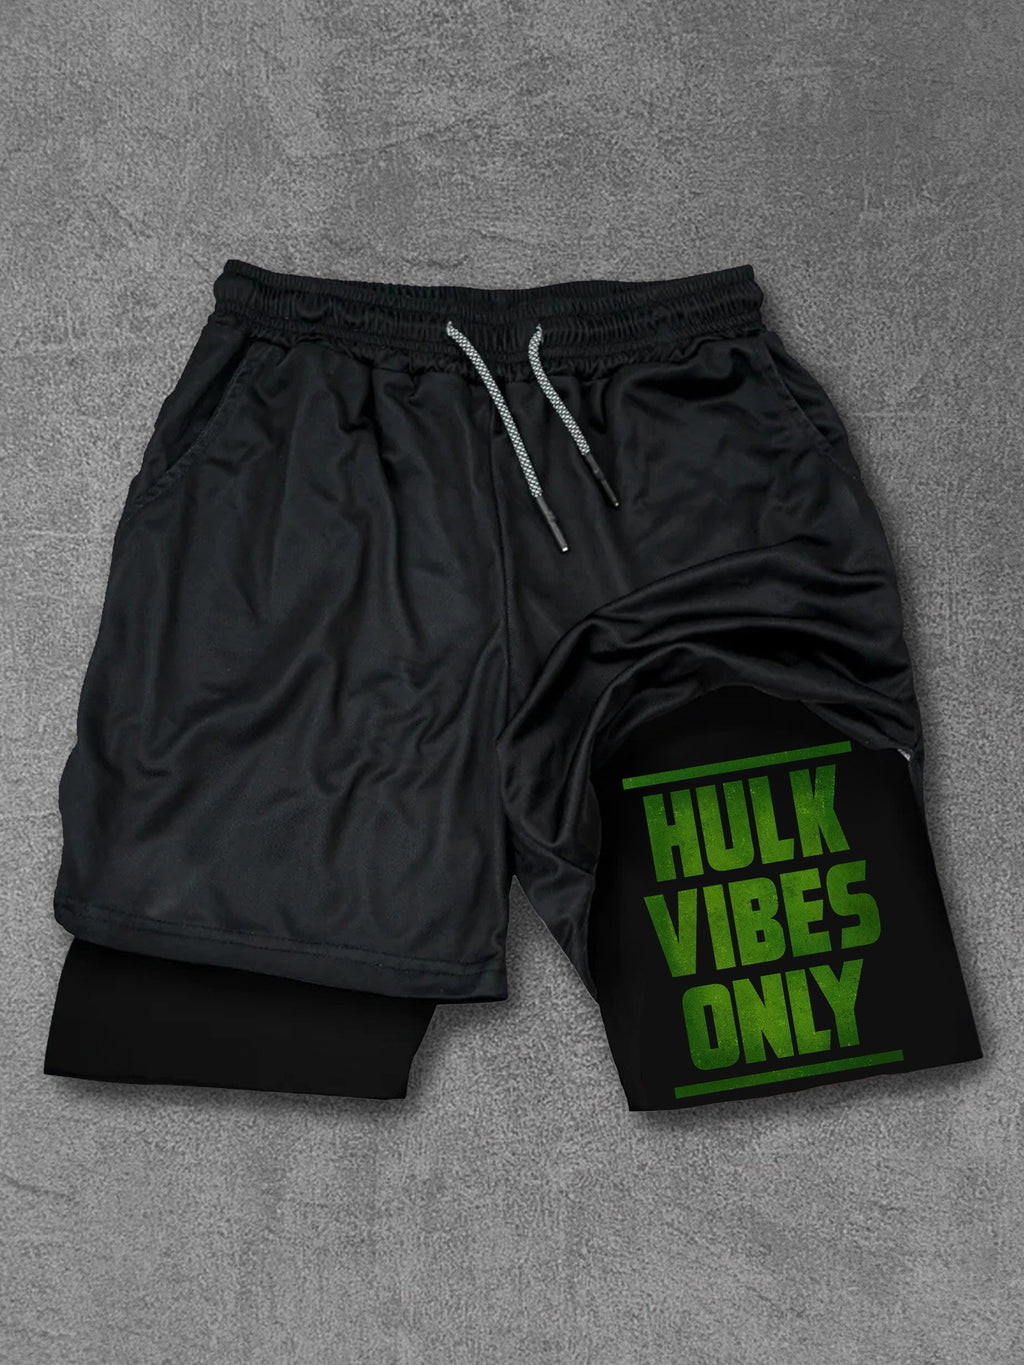 IronPandafit hulk vibes only Performance Training Shorts For Sale